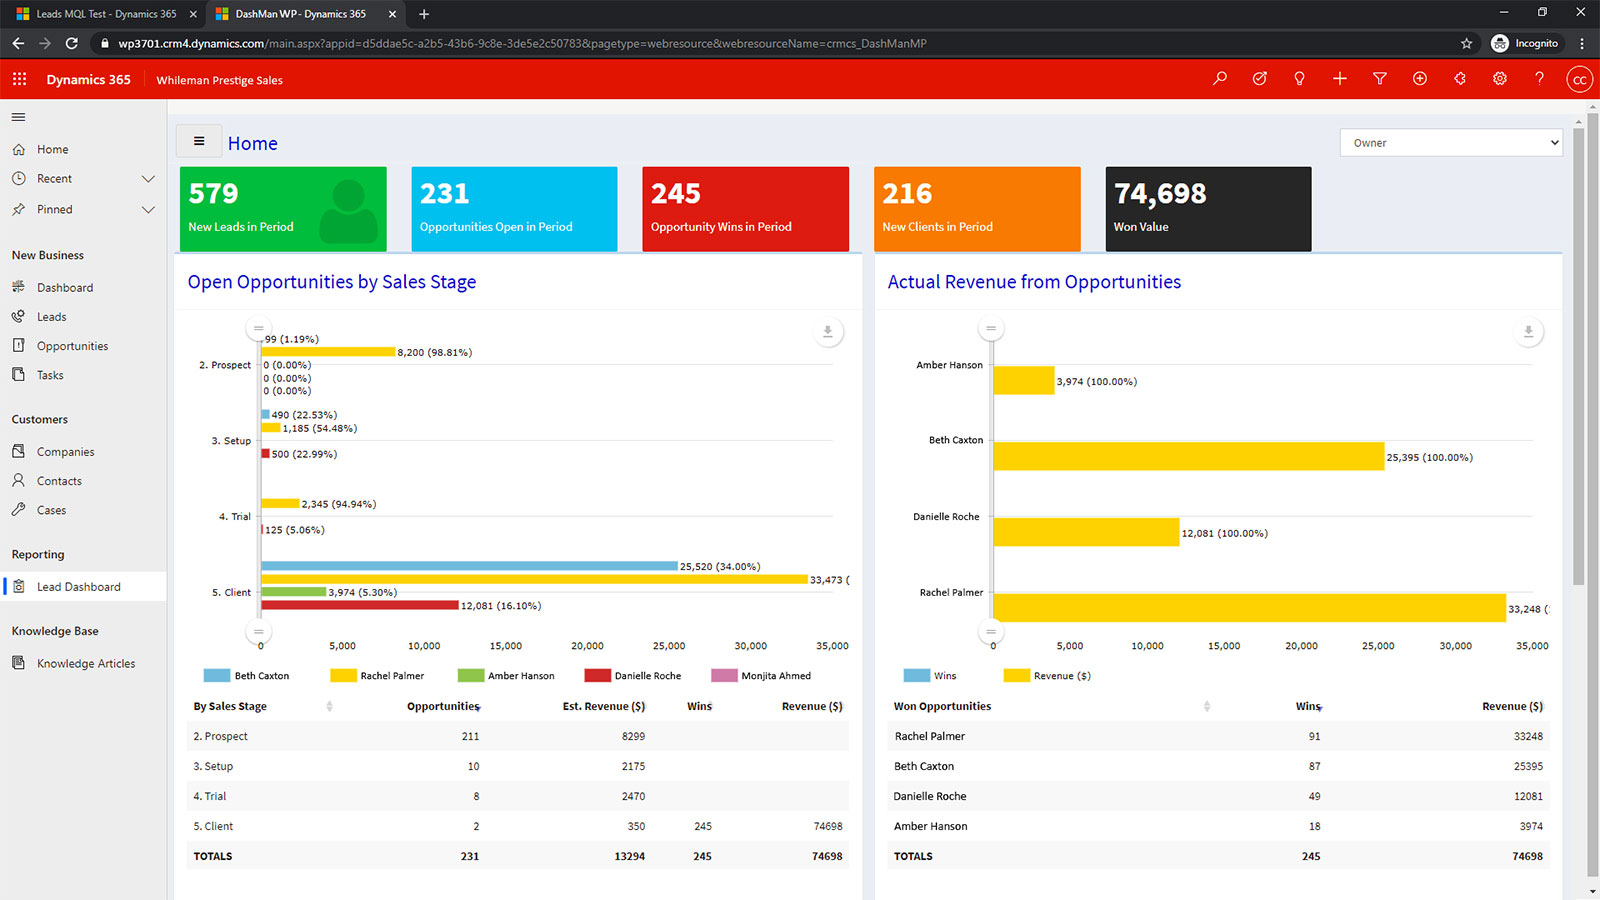 Engagement Dashboards screenshot | CRMCS Microsoft Consultants